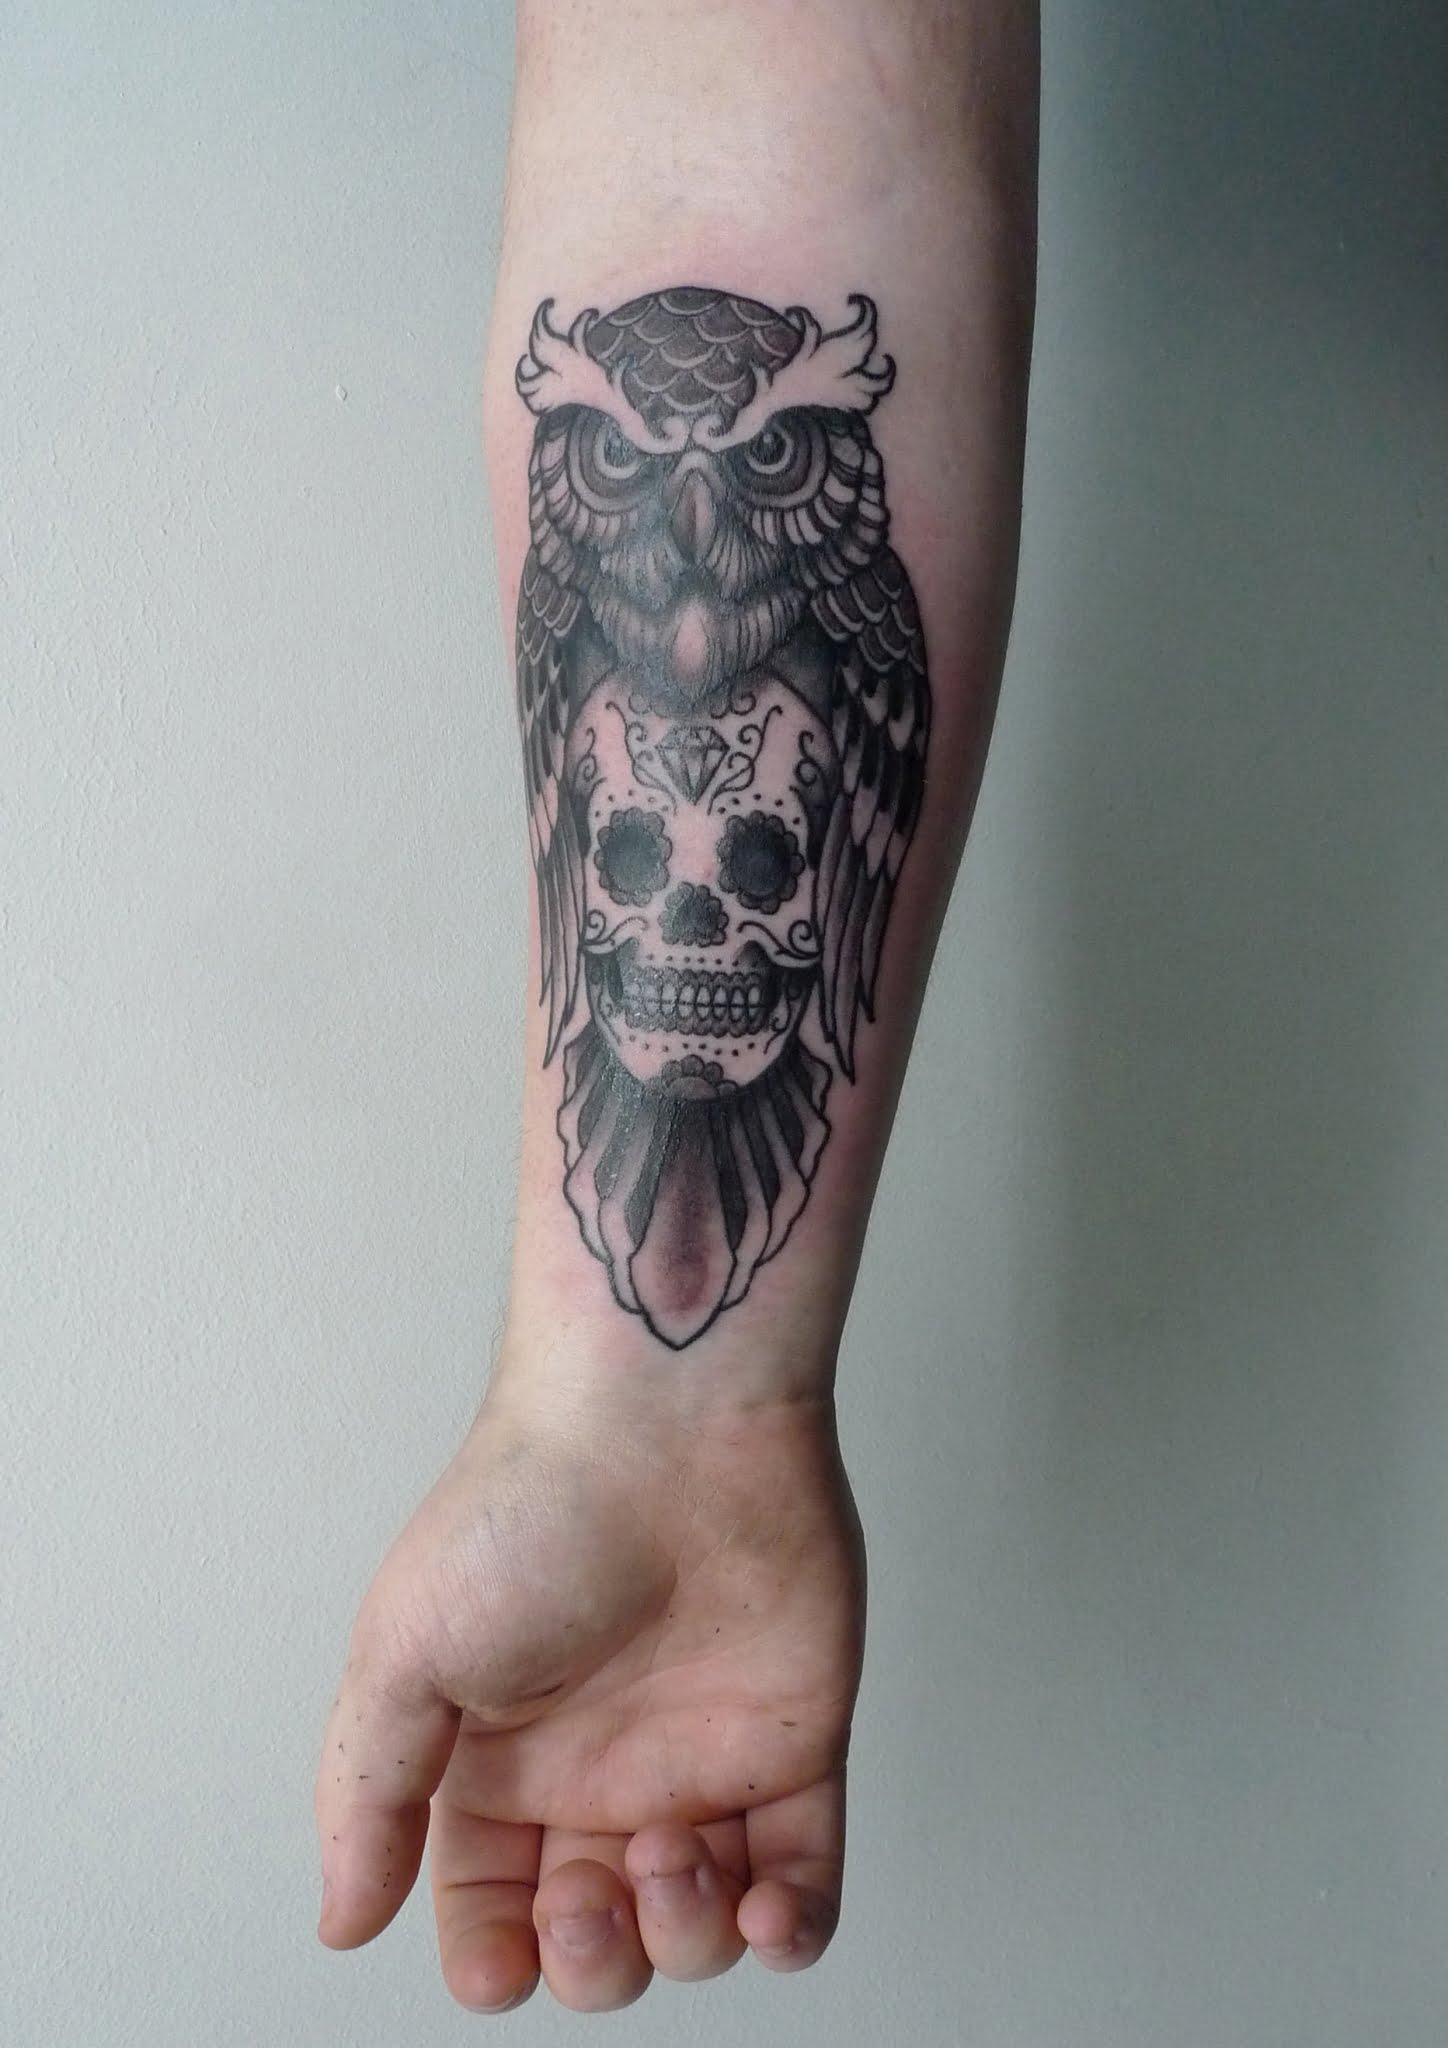 Owl skull tattoo on the back